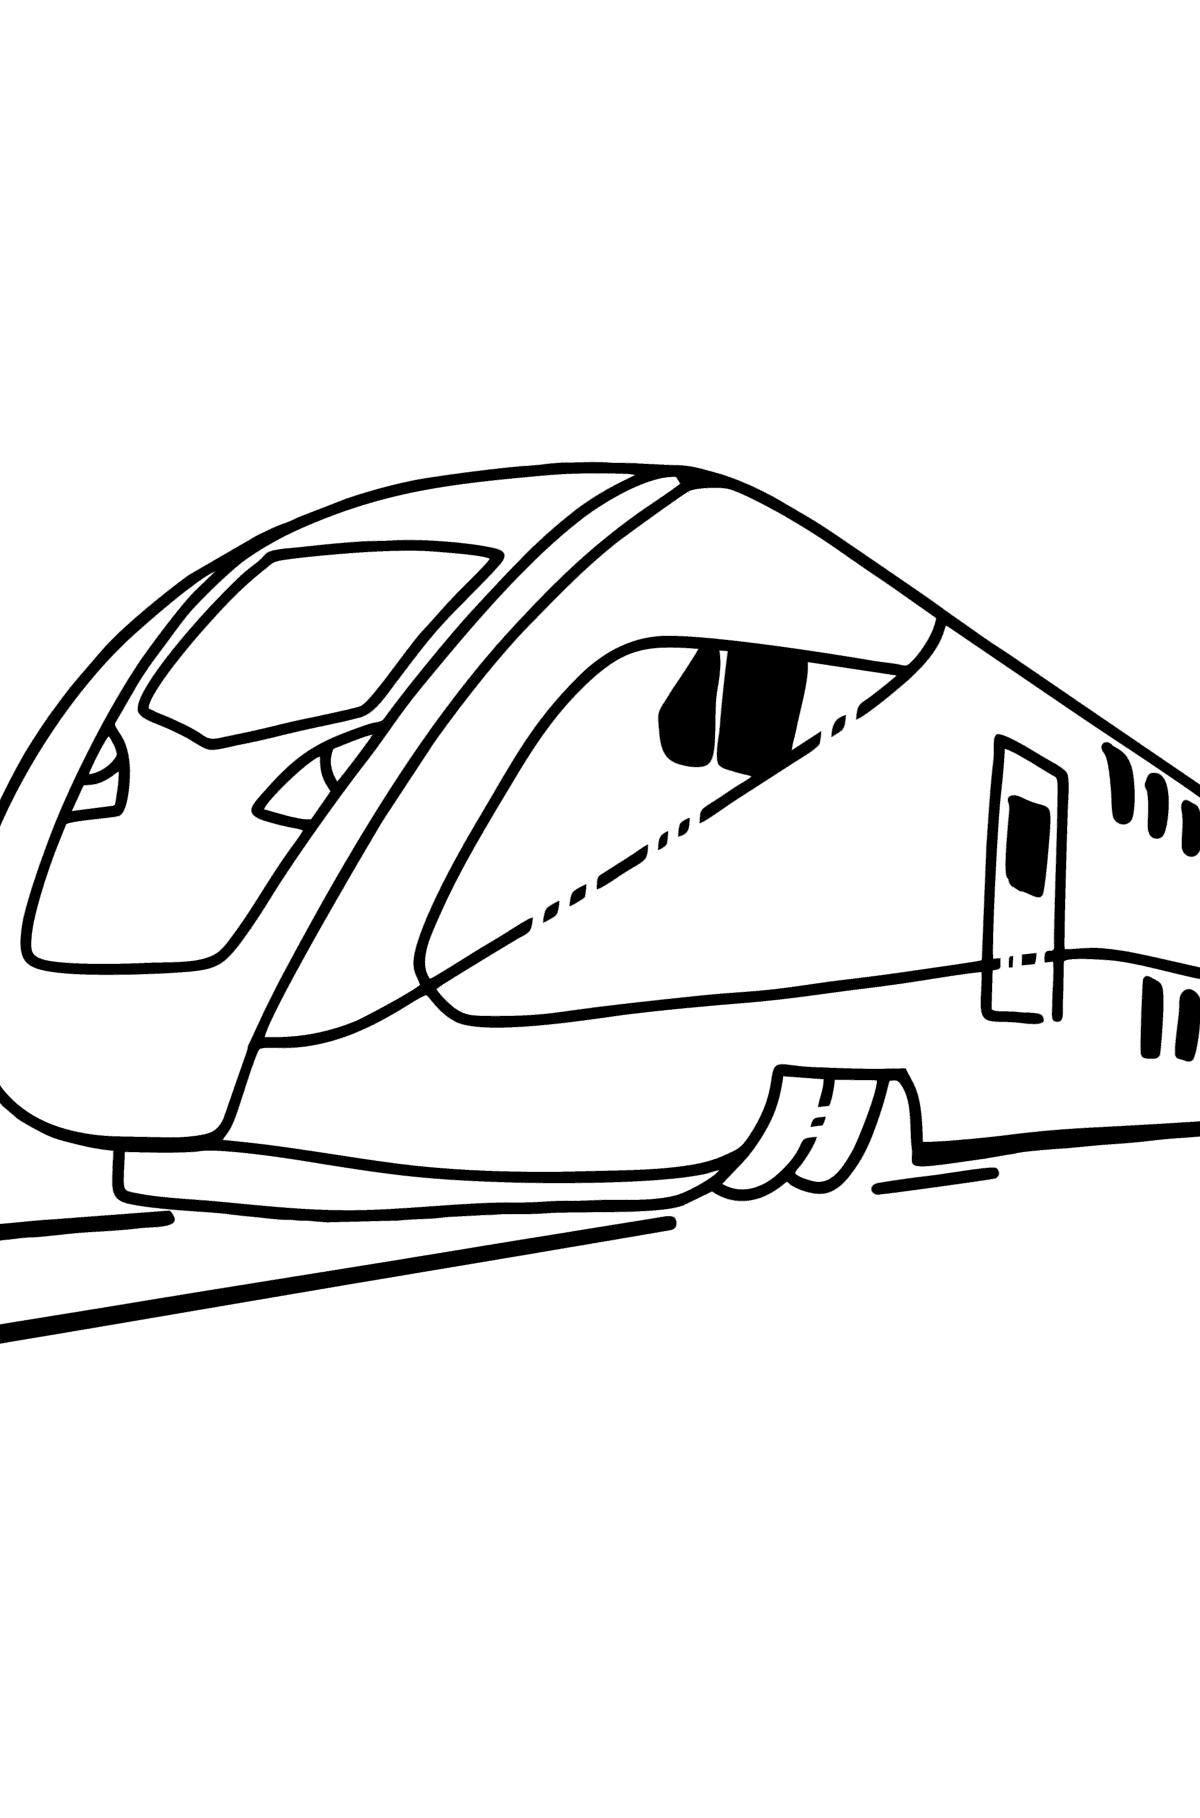 Tegning til fargelegging moderne tog - Tegninger til fargelegging for barn